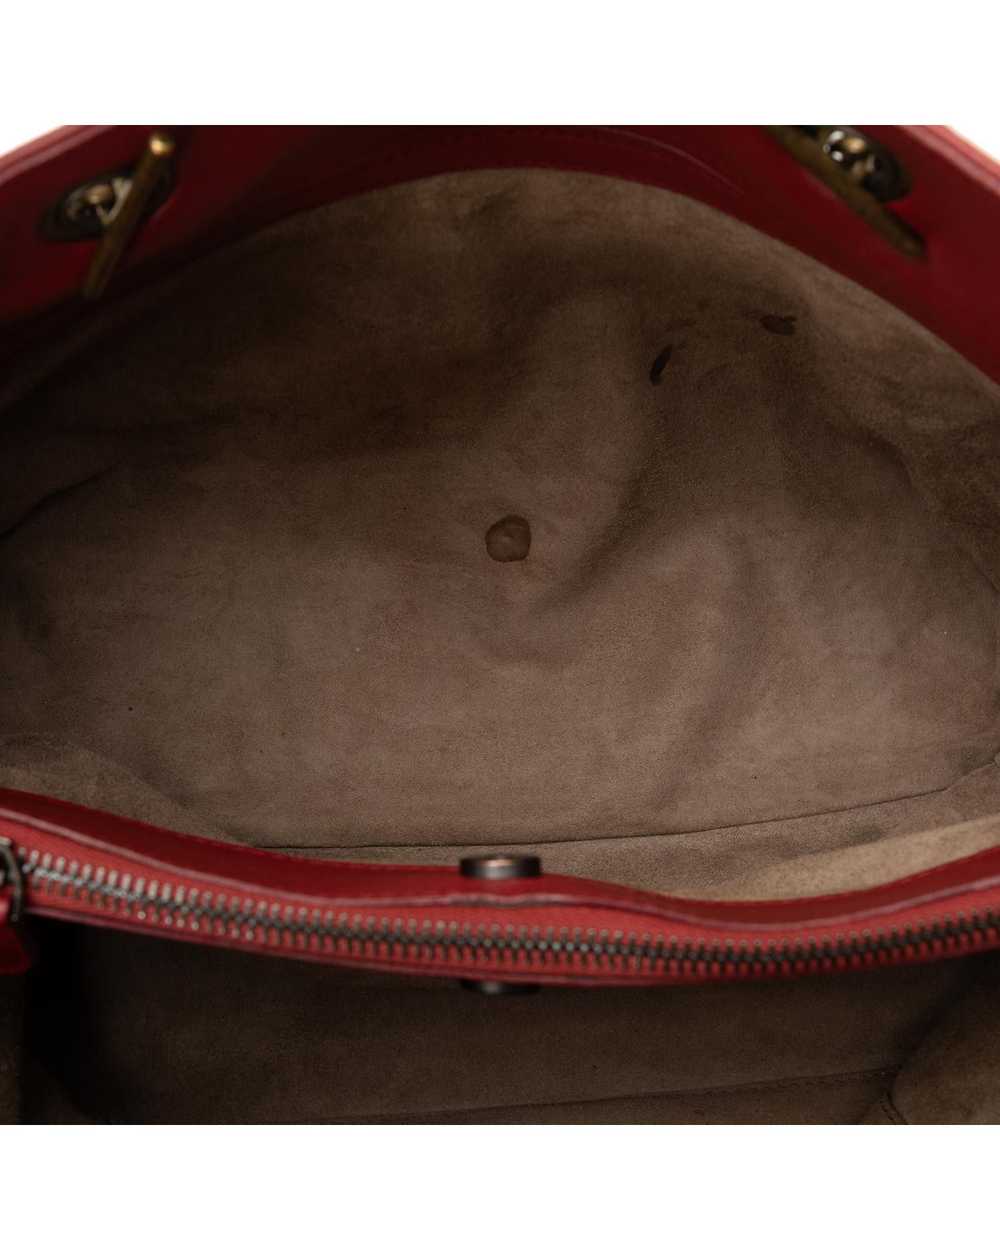 Bottega Veneta Woven Leather Double Chain Tote Bag - image 6